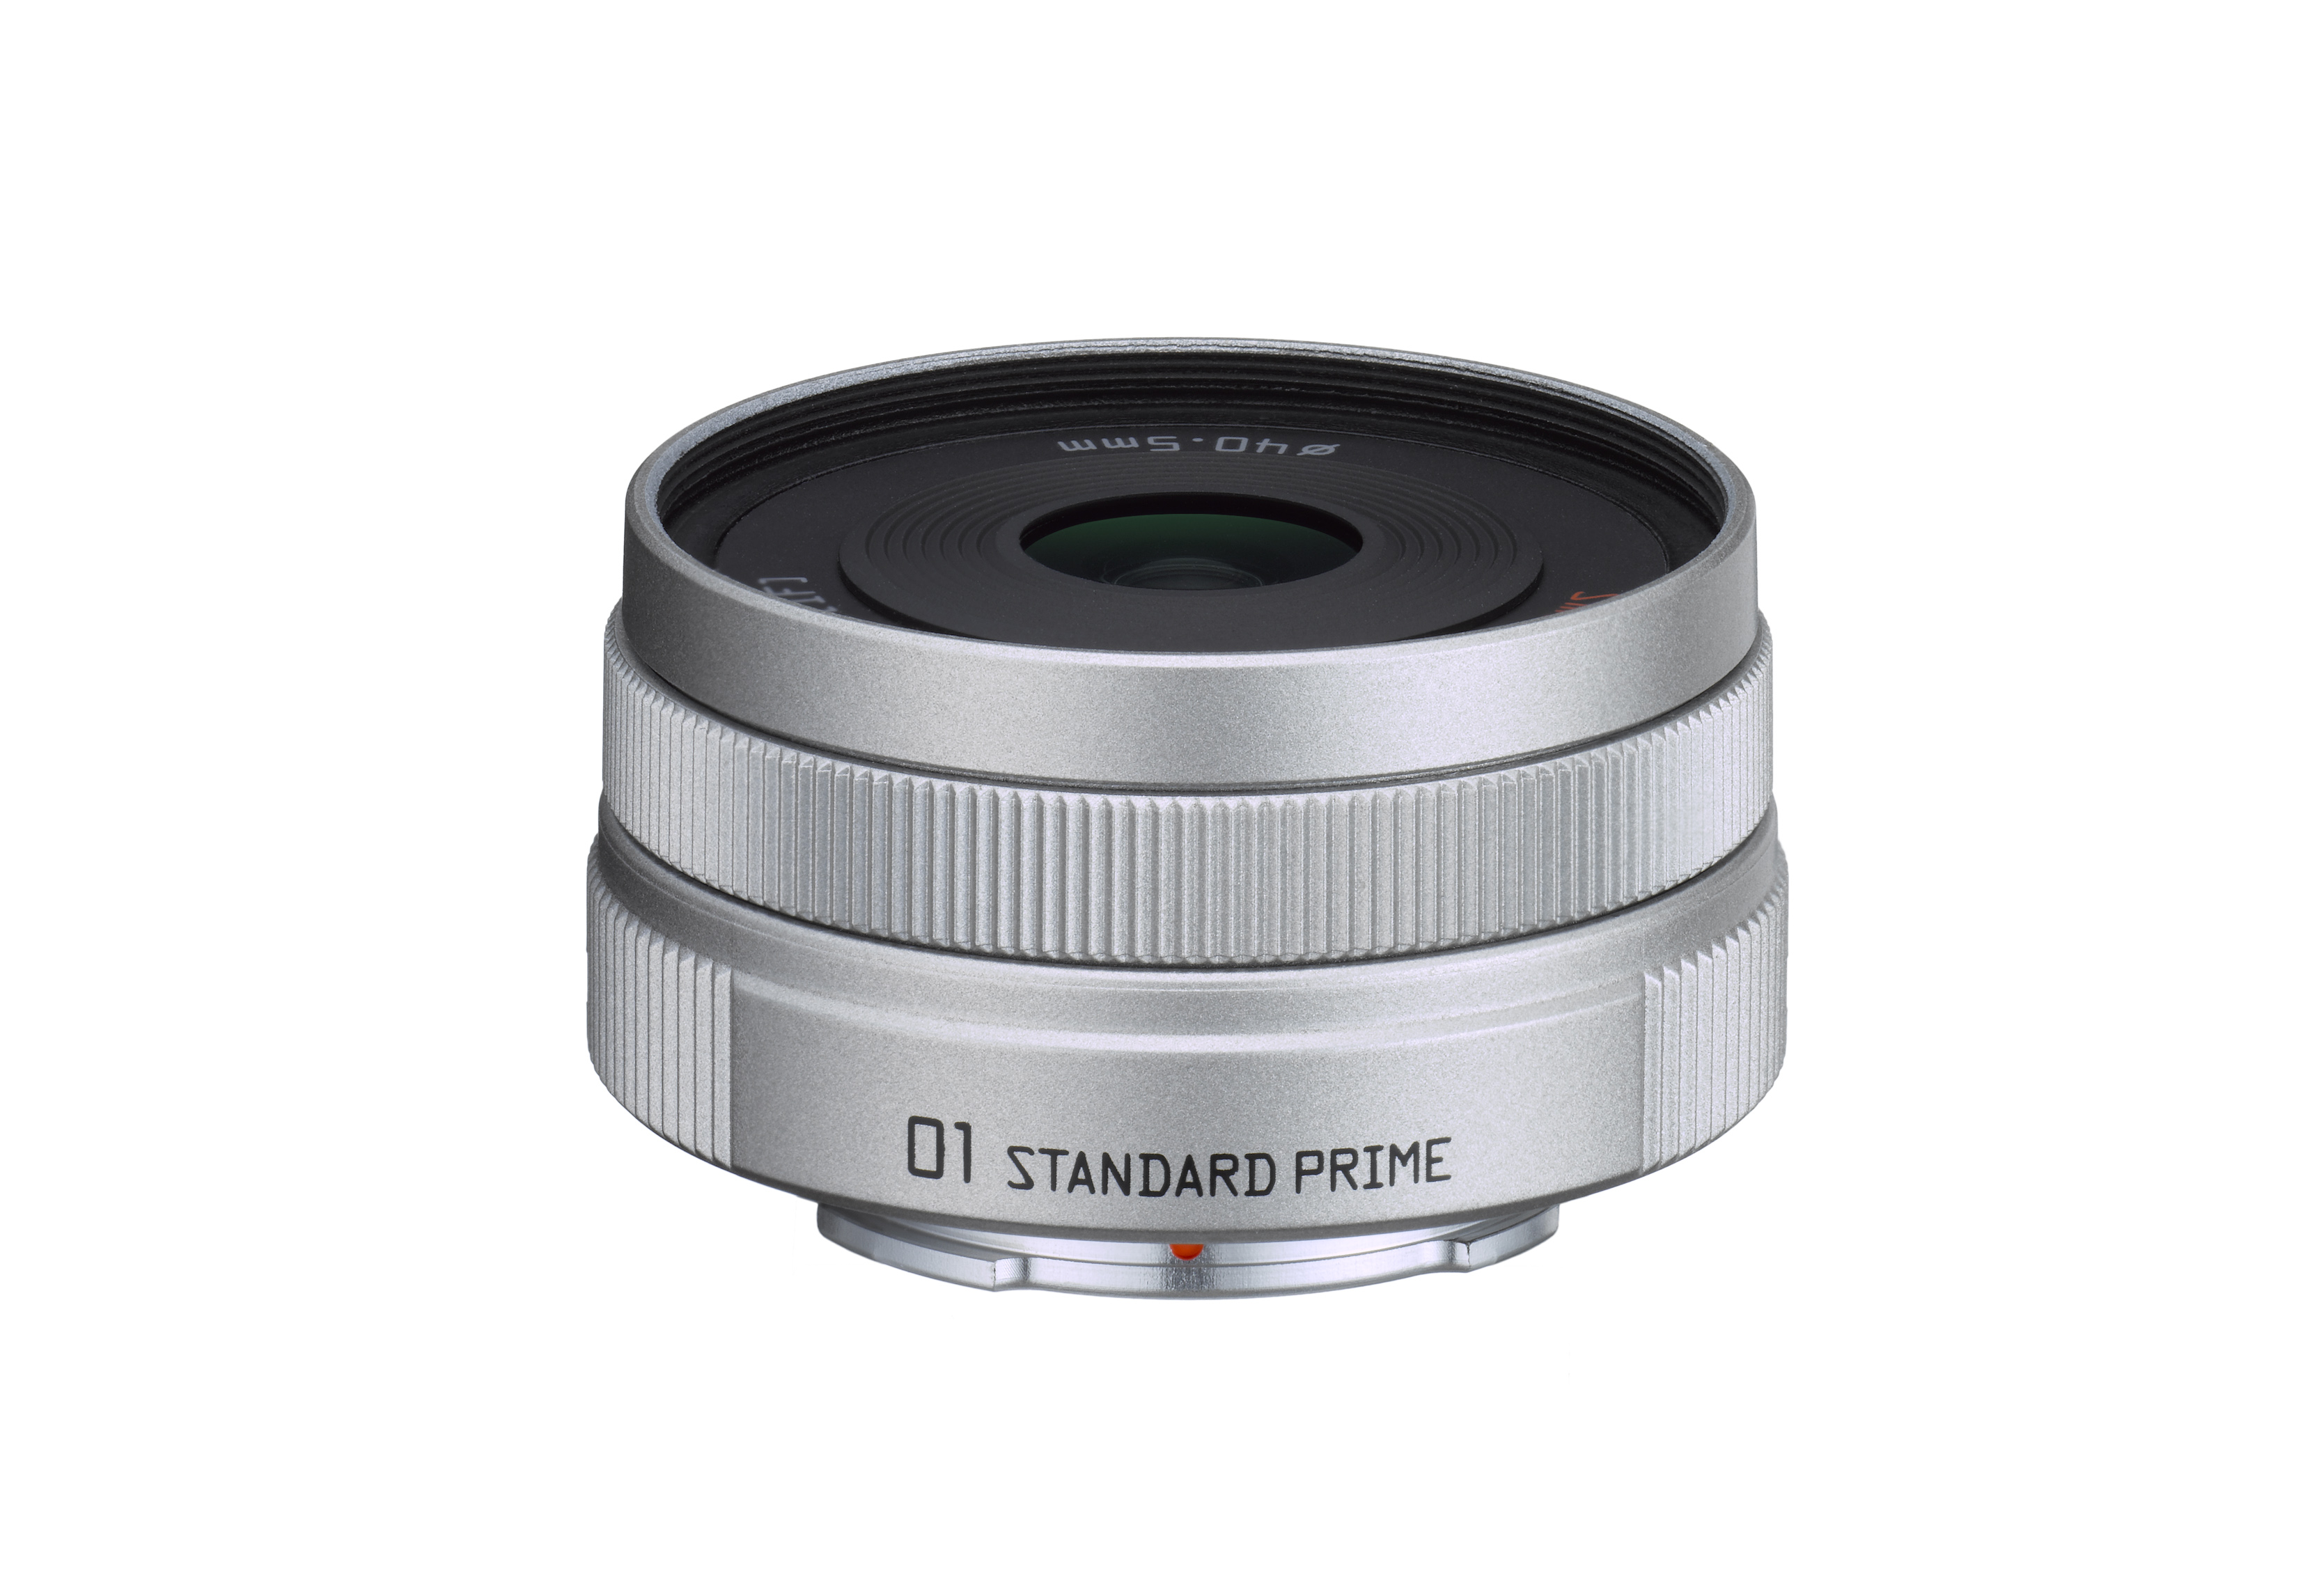 Five Q mount interchangeable lenses designed for exclusive use